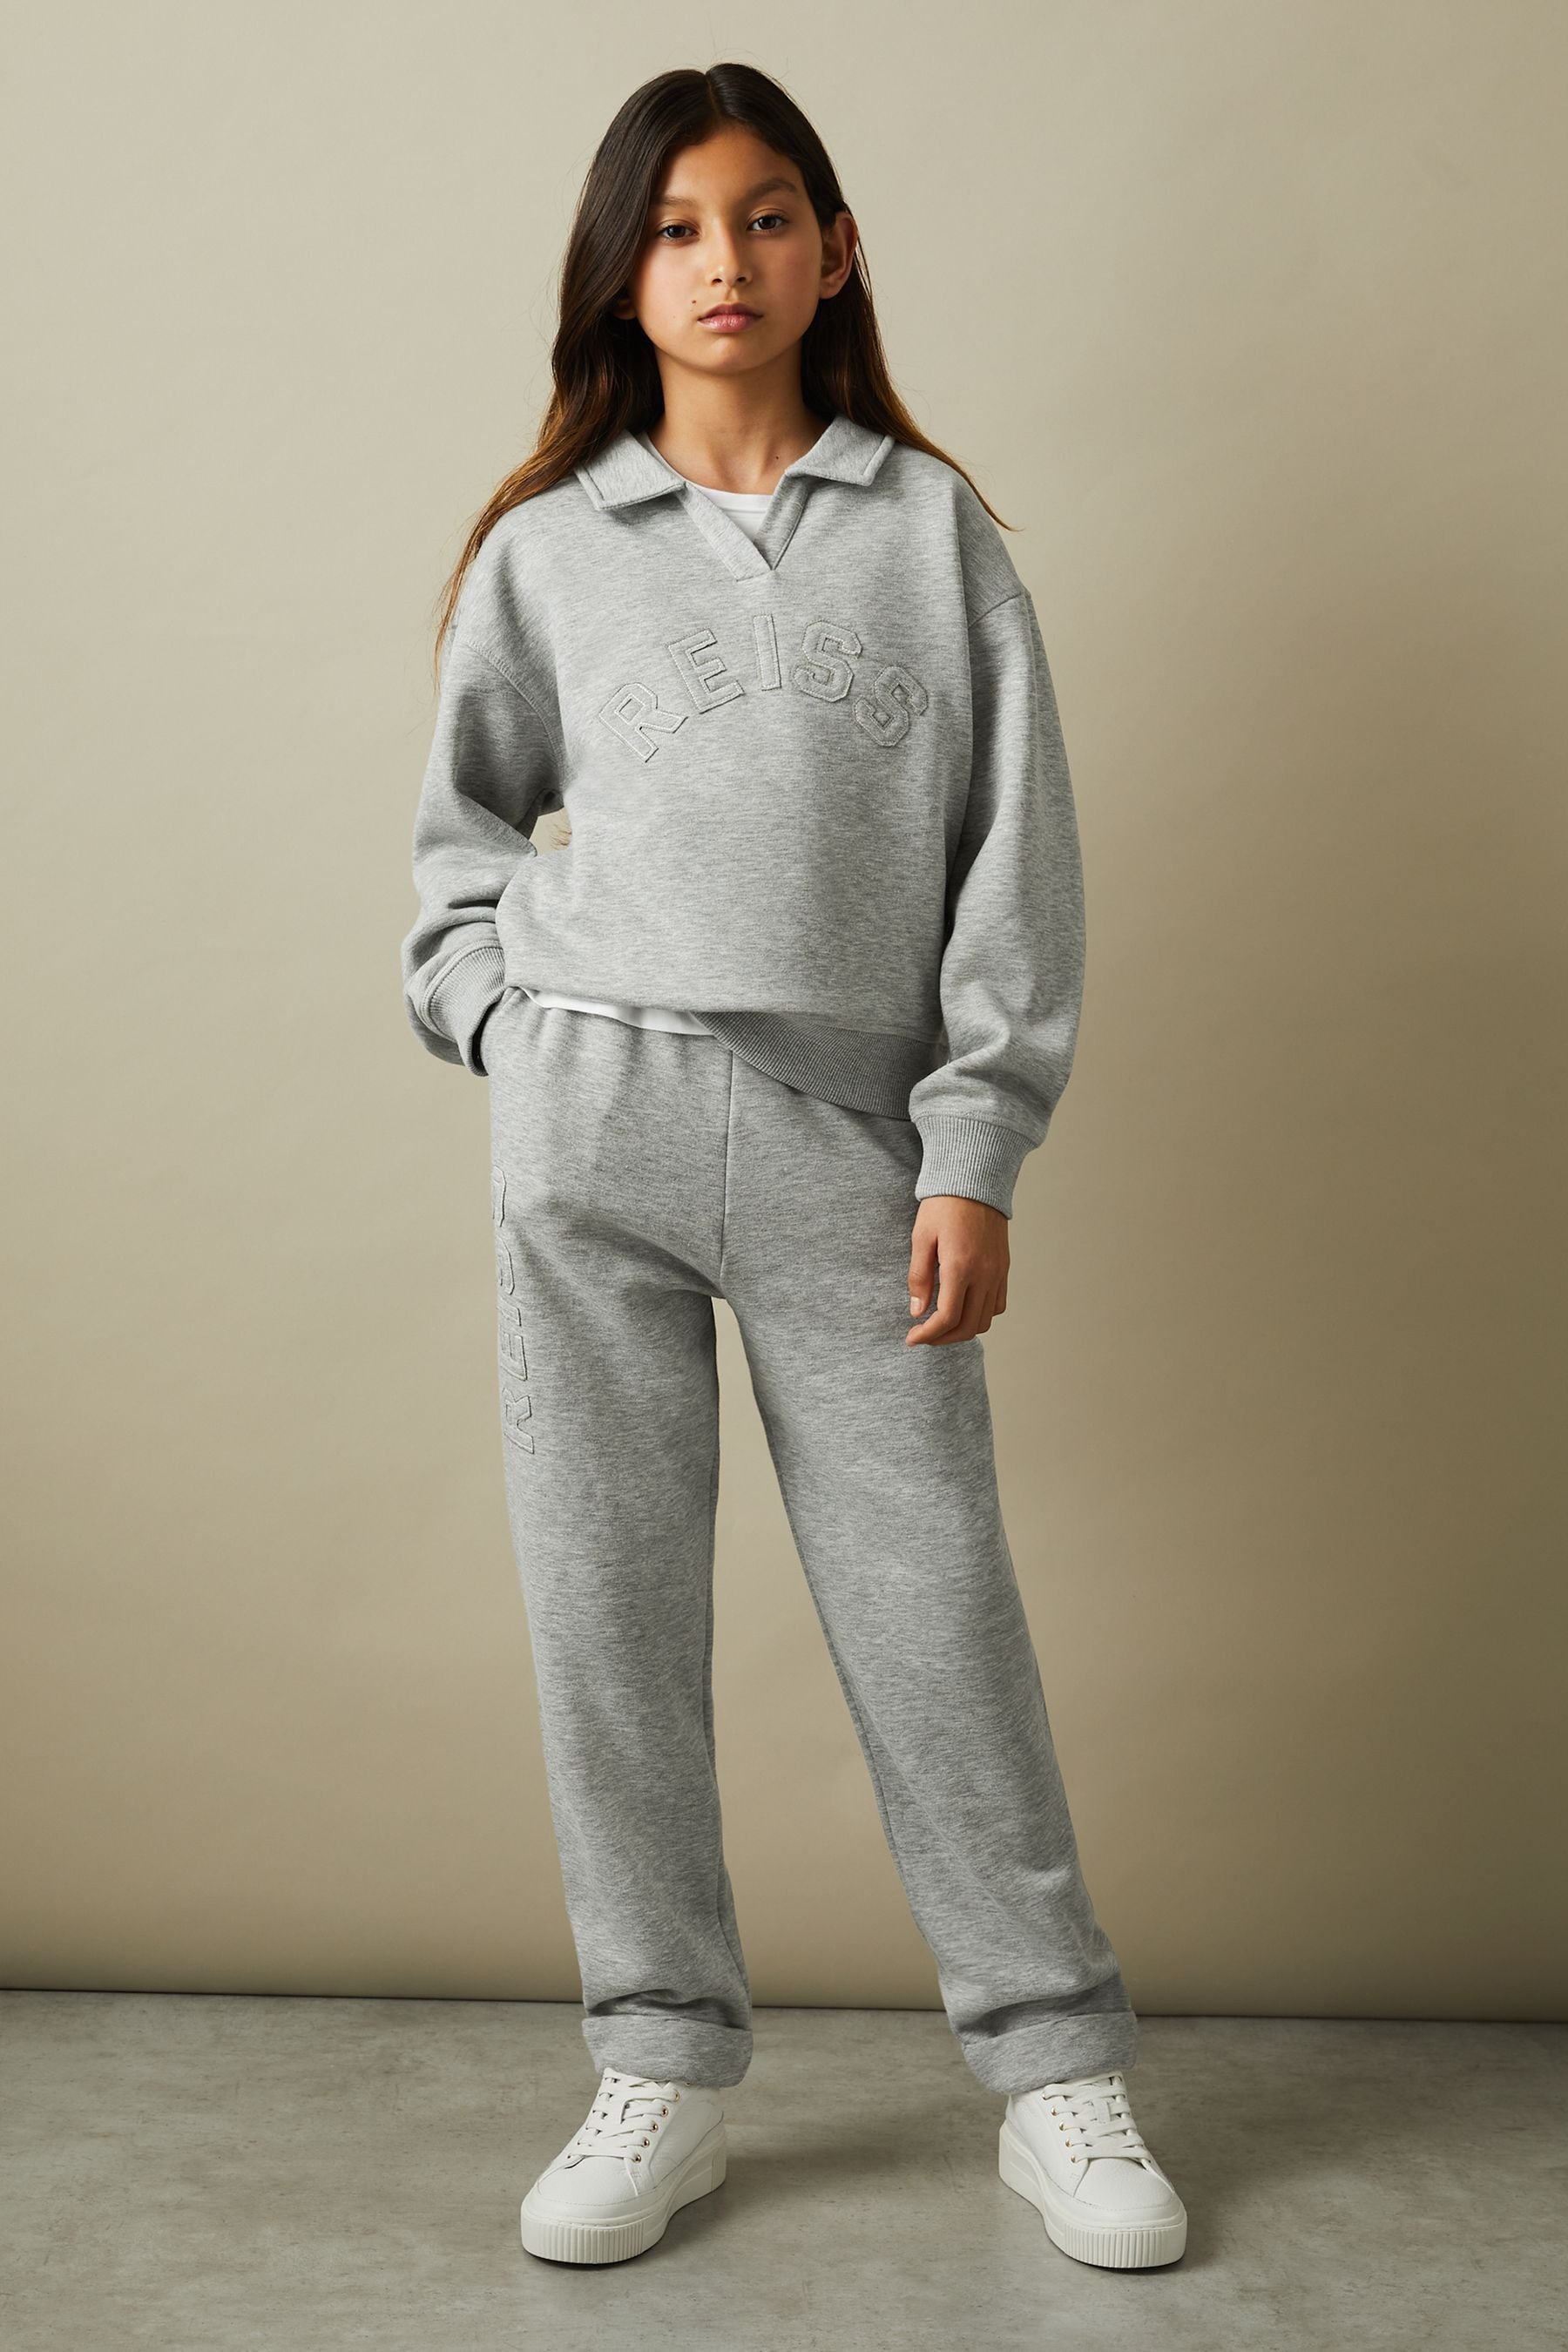 Reiss Paulina - Grey Senior Applique Logo Sweatshirt, Uk 11-12 Yrs